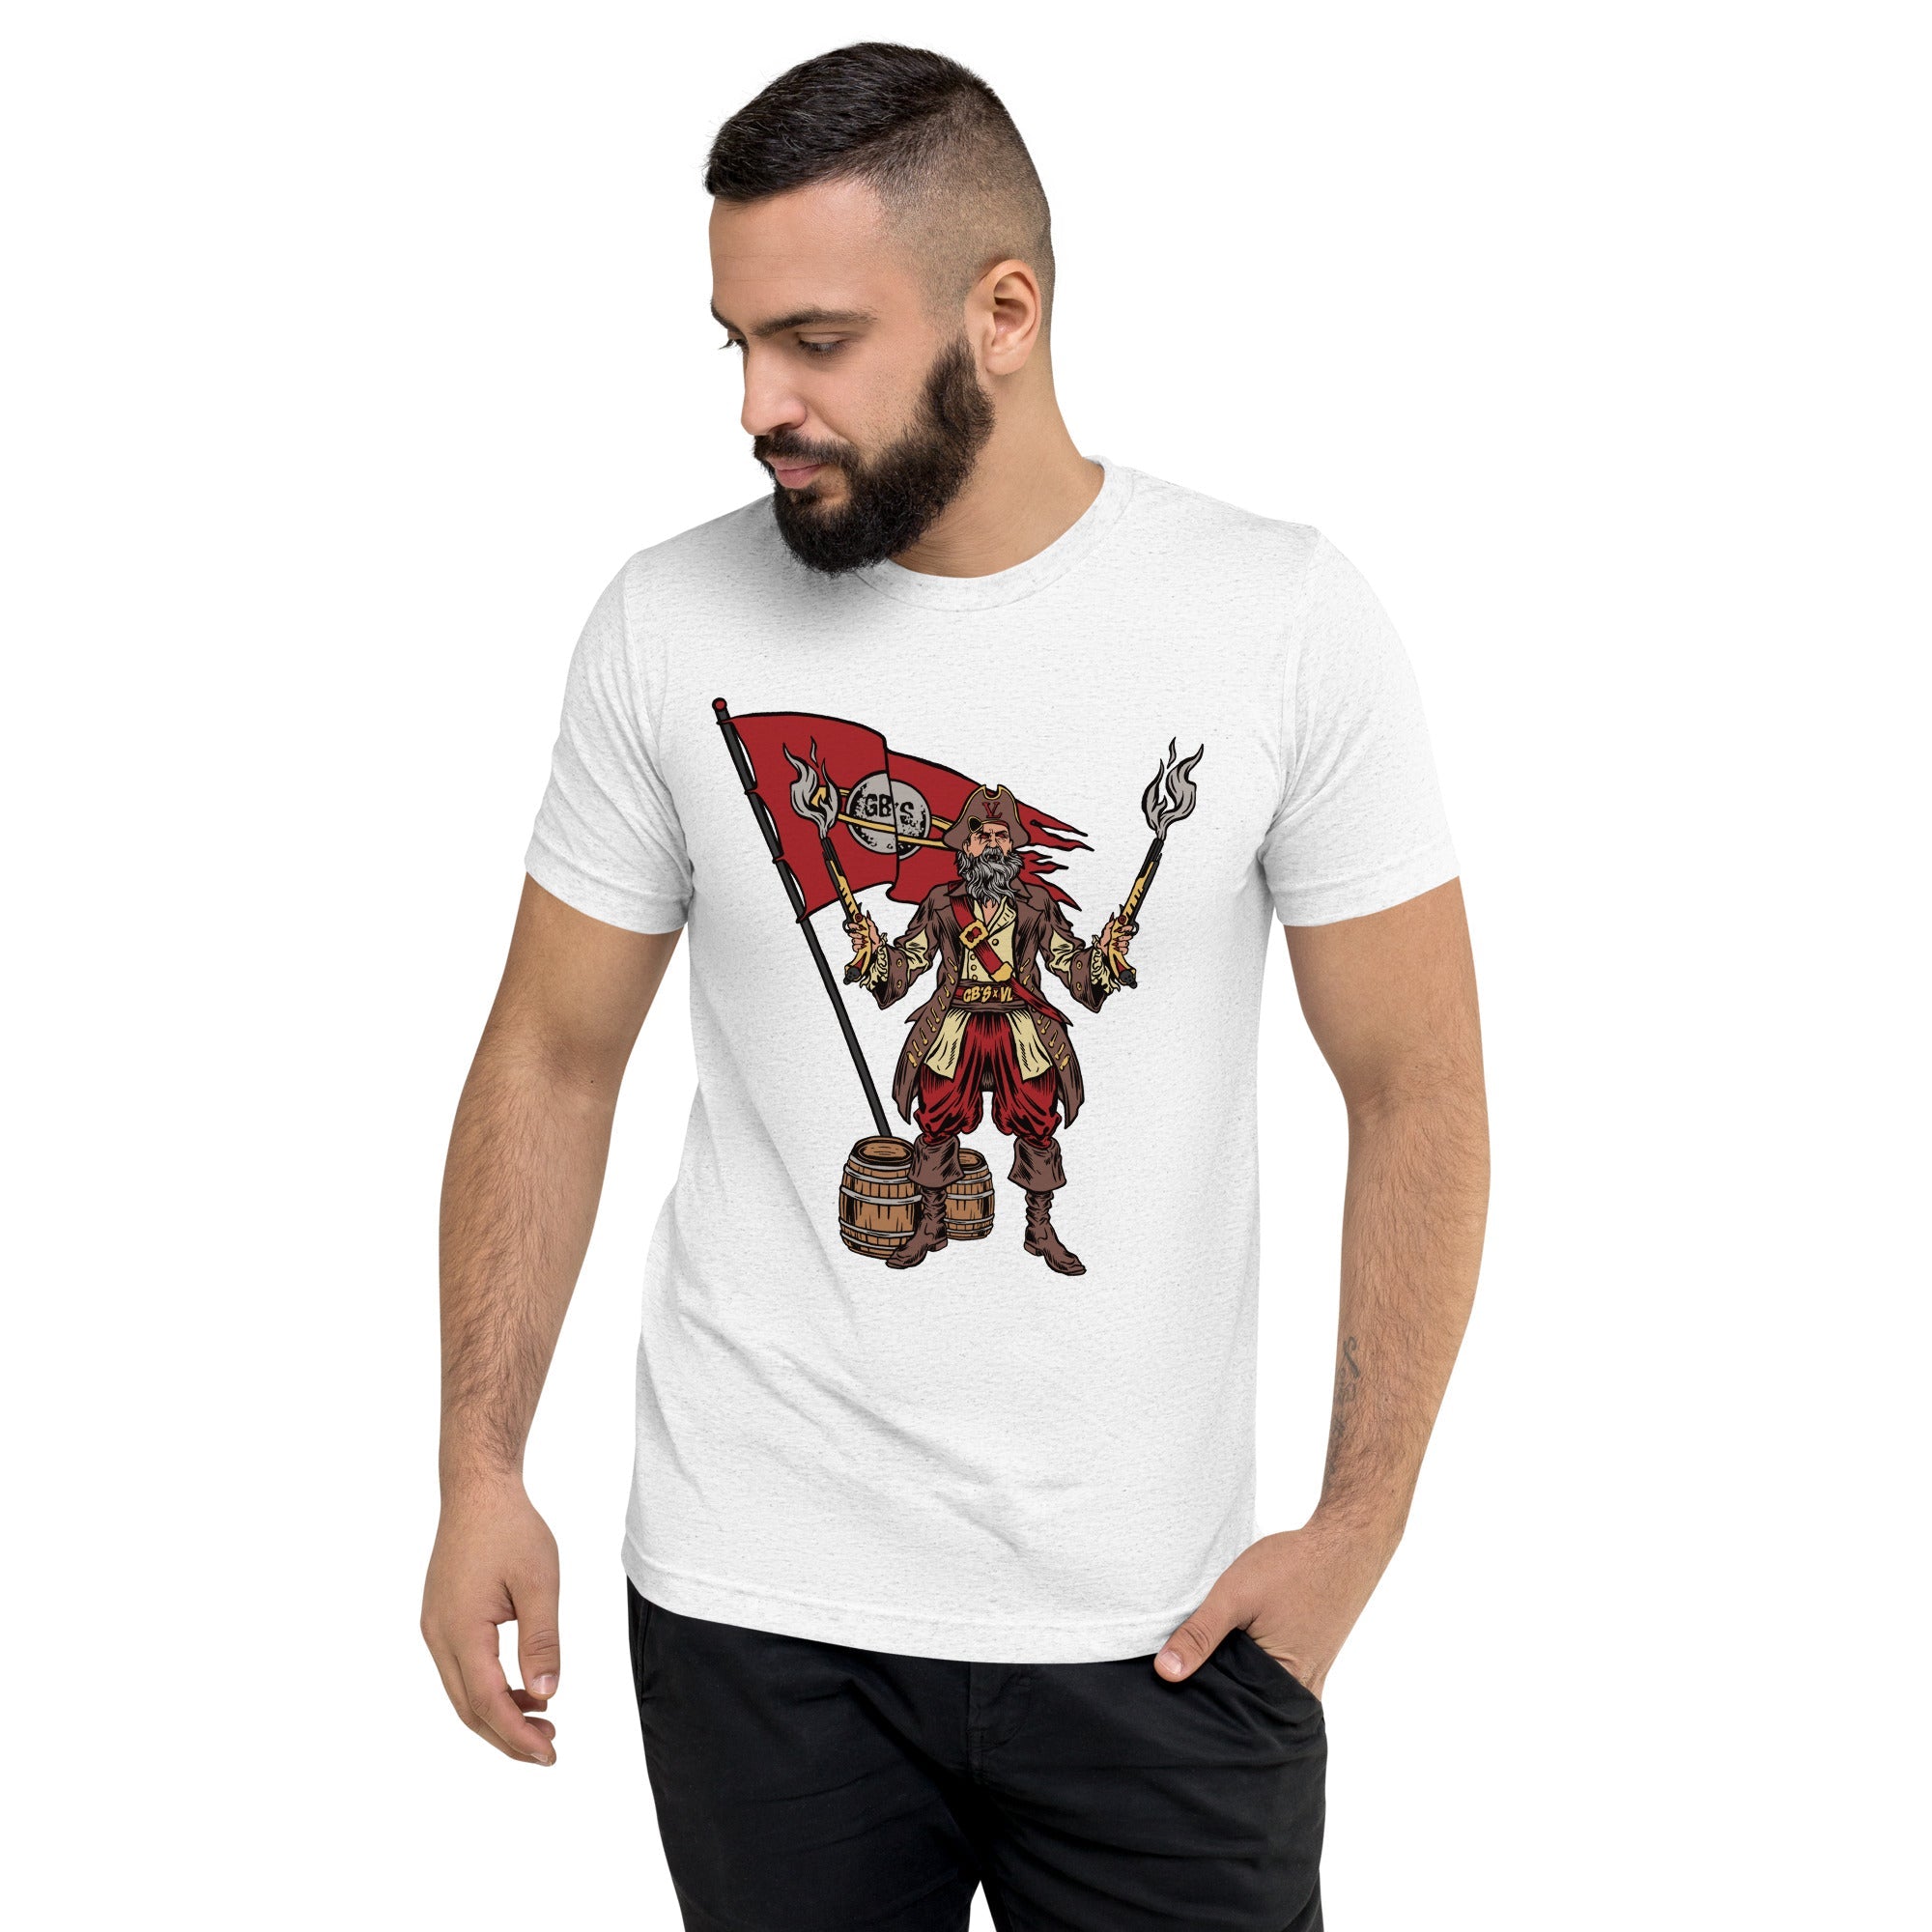 GBNY Solid White Triblend / XS Vamp Life X GBNY "Pirate Vamp" T-shirt - Men's 1187077_16792